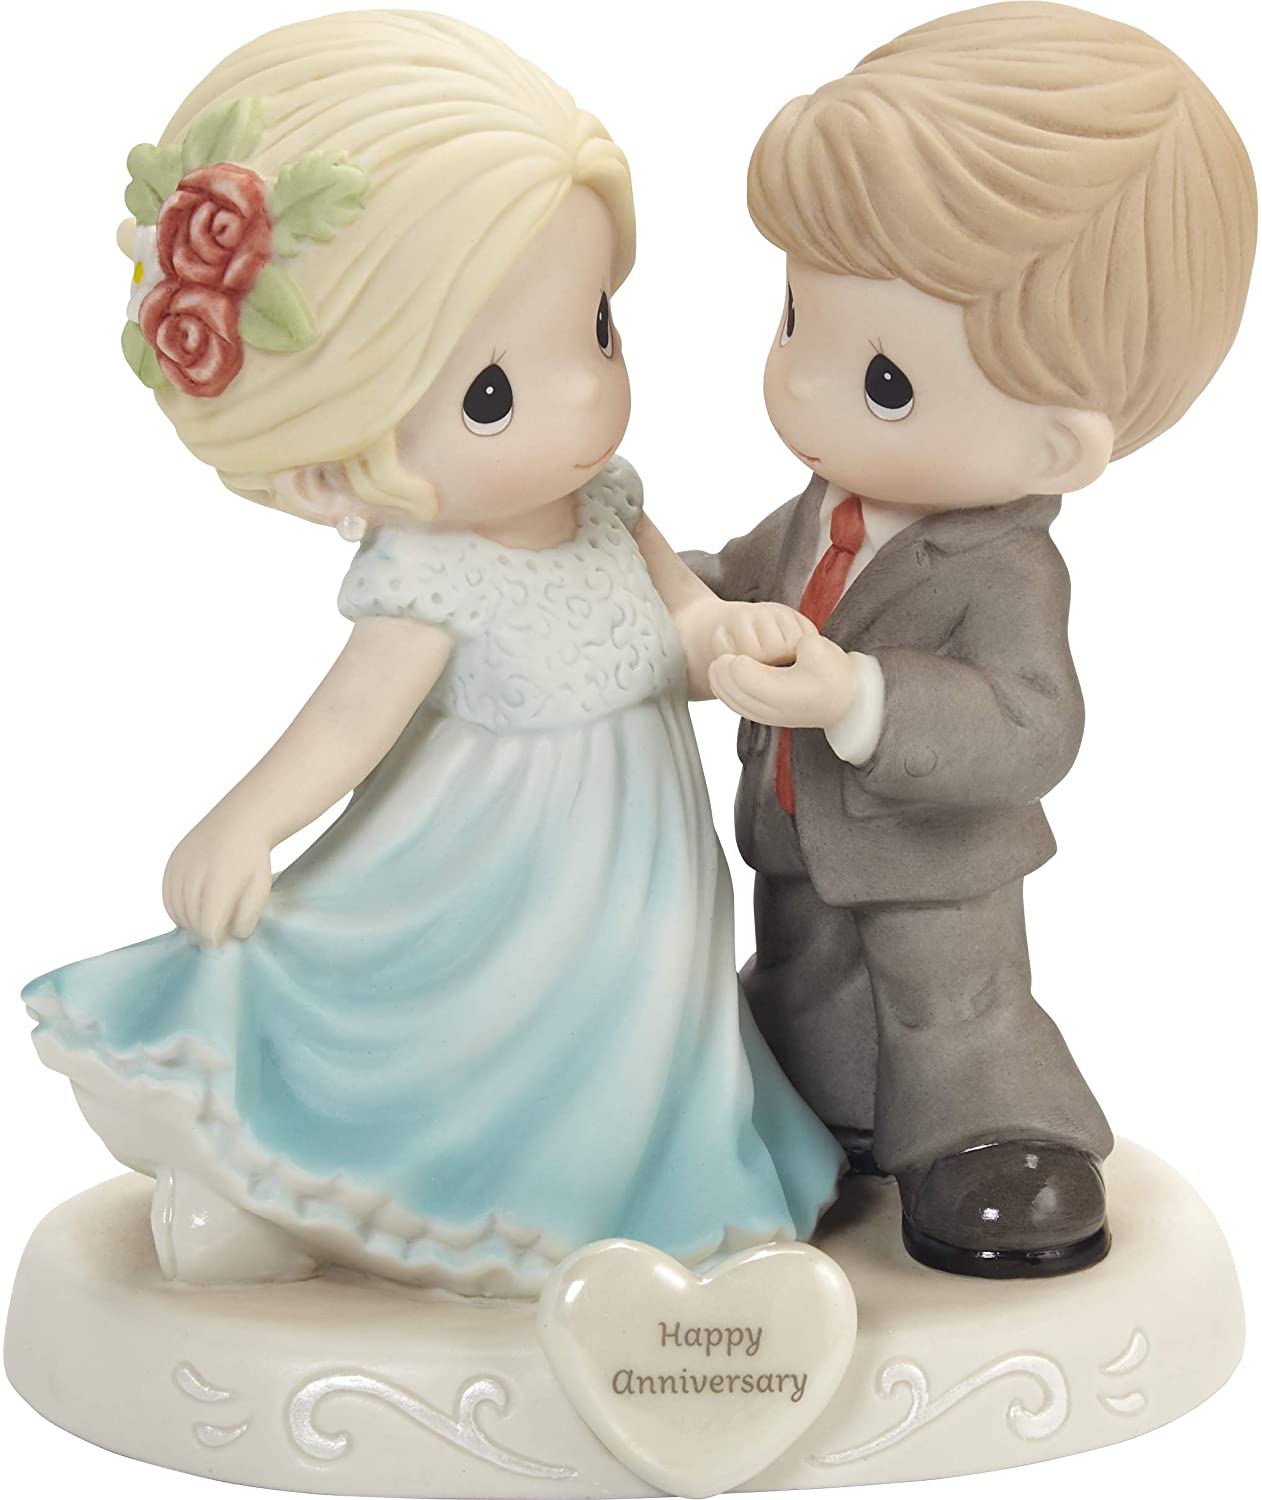 Precious Moments happy anniversary (You Make Life Beautiful Figurine) - Royal Gift